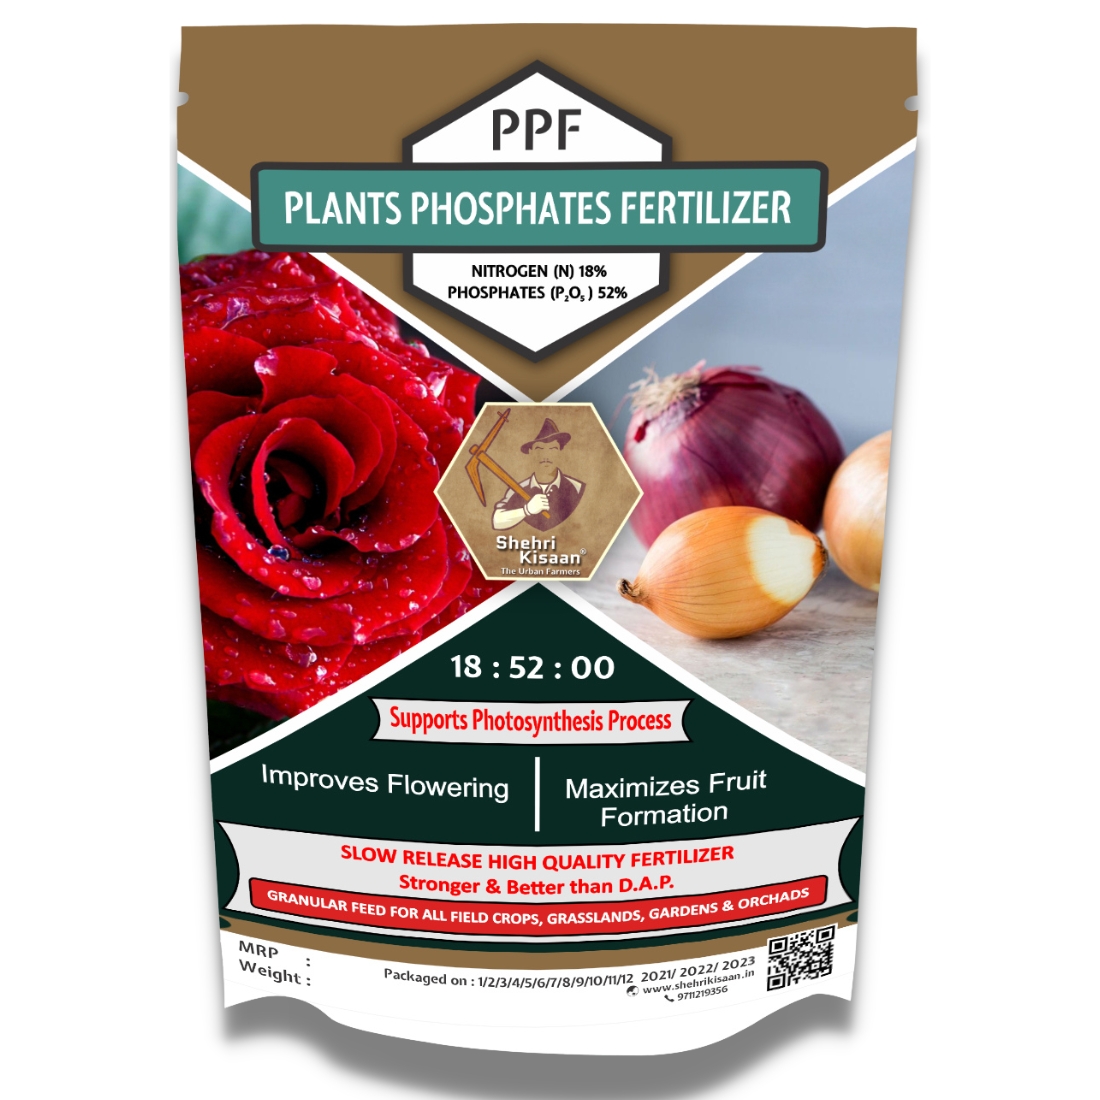 Plant Phosphate Fertilizer